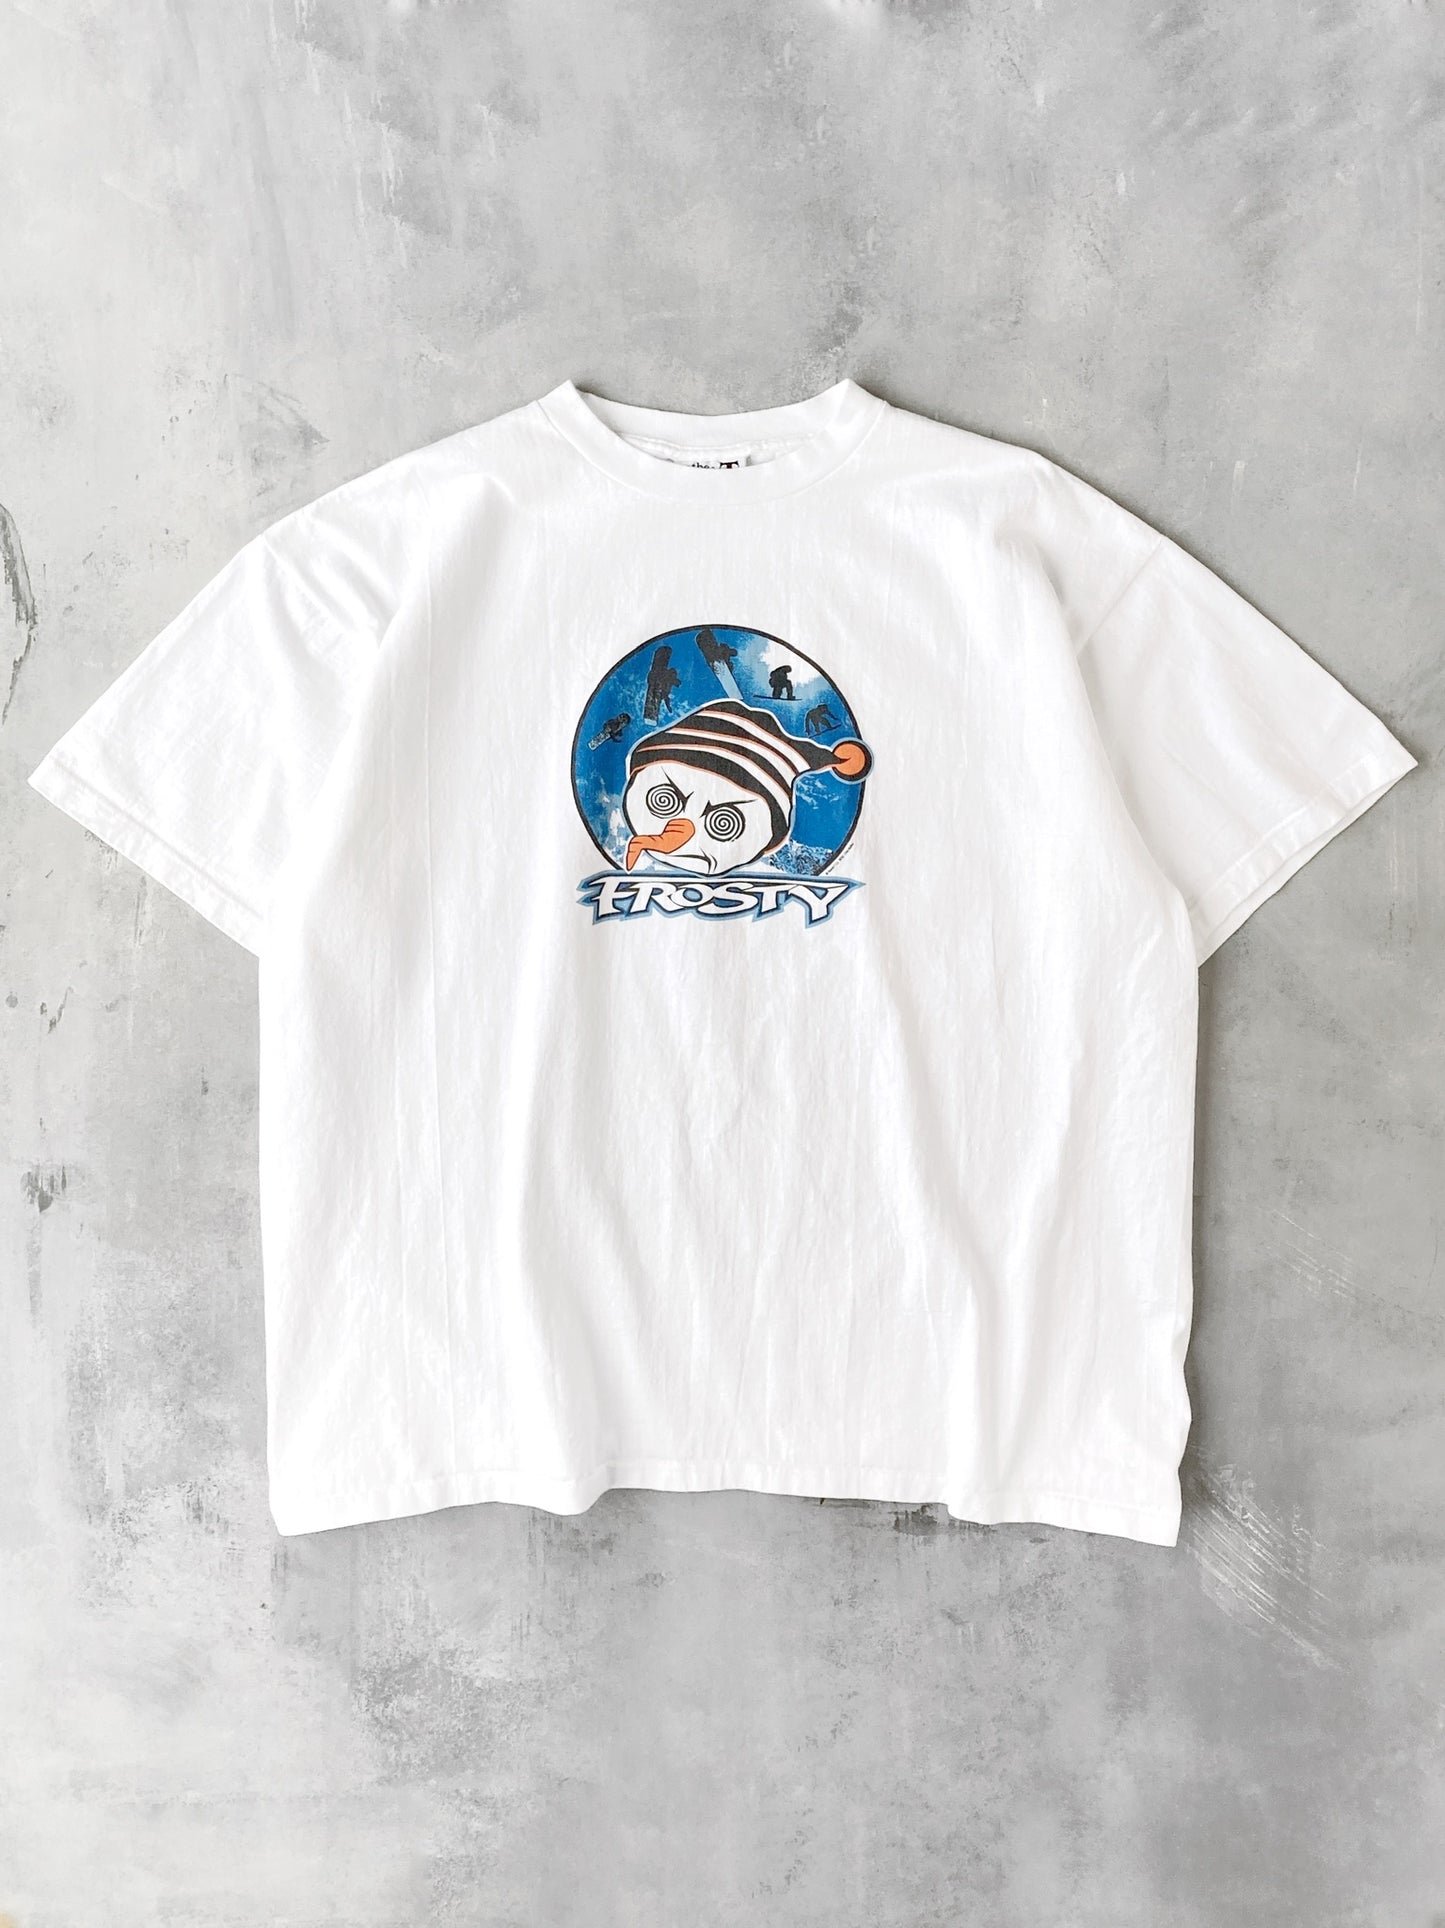 Frosty Snowboarding T-Shirt 90's - XL / XXL